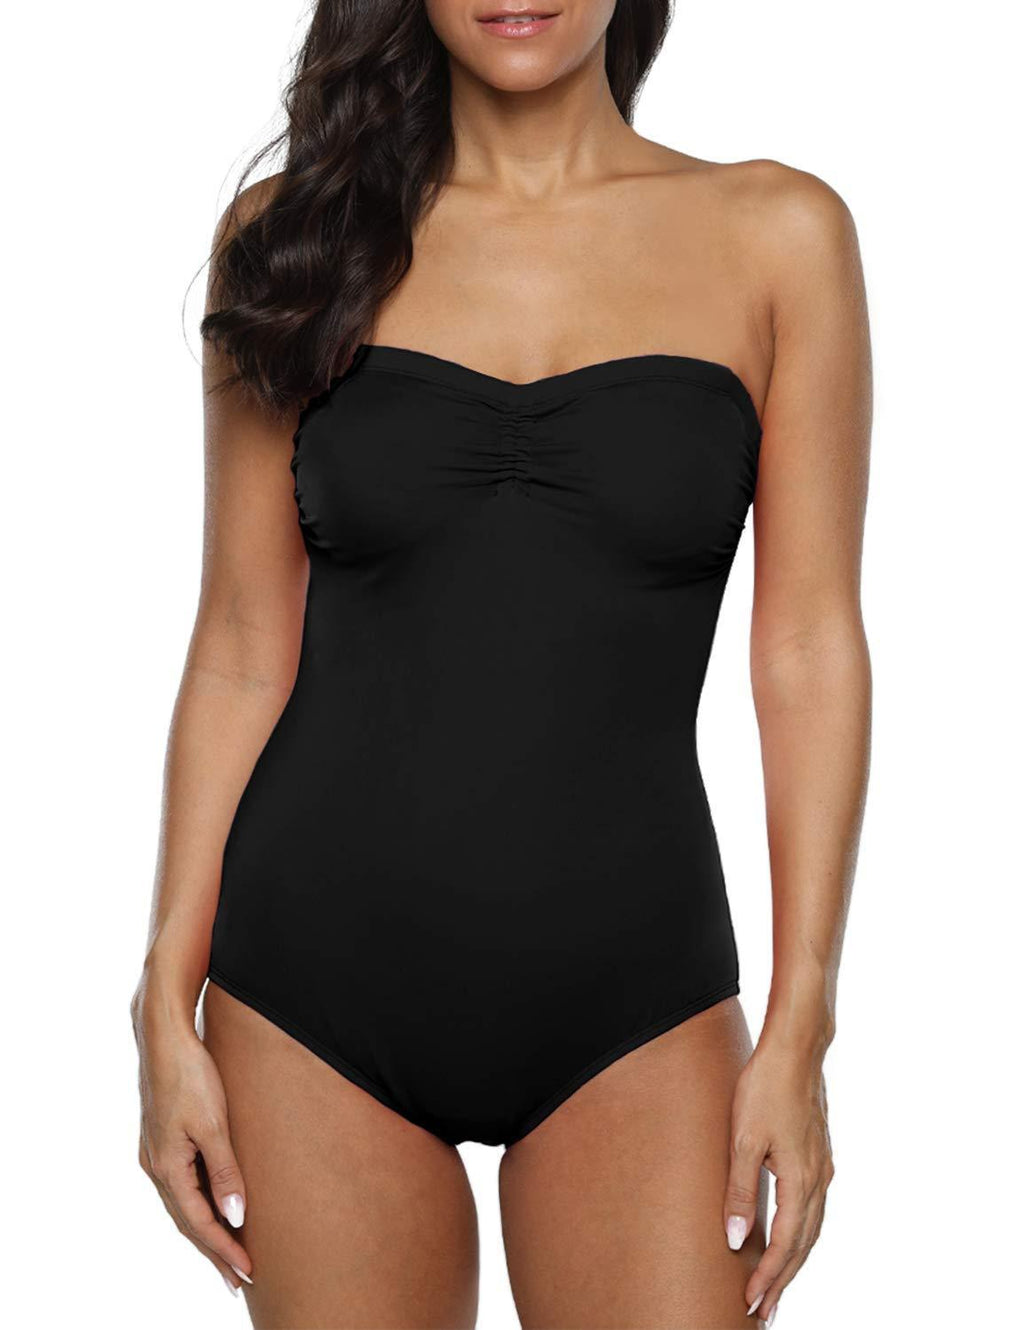 [AUSTRALIA] - Hilor Women's One Piece Swimsuits Bandeau Bathing Suits with Front Drawstring Black 10 